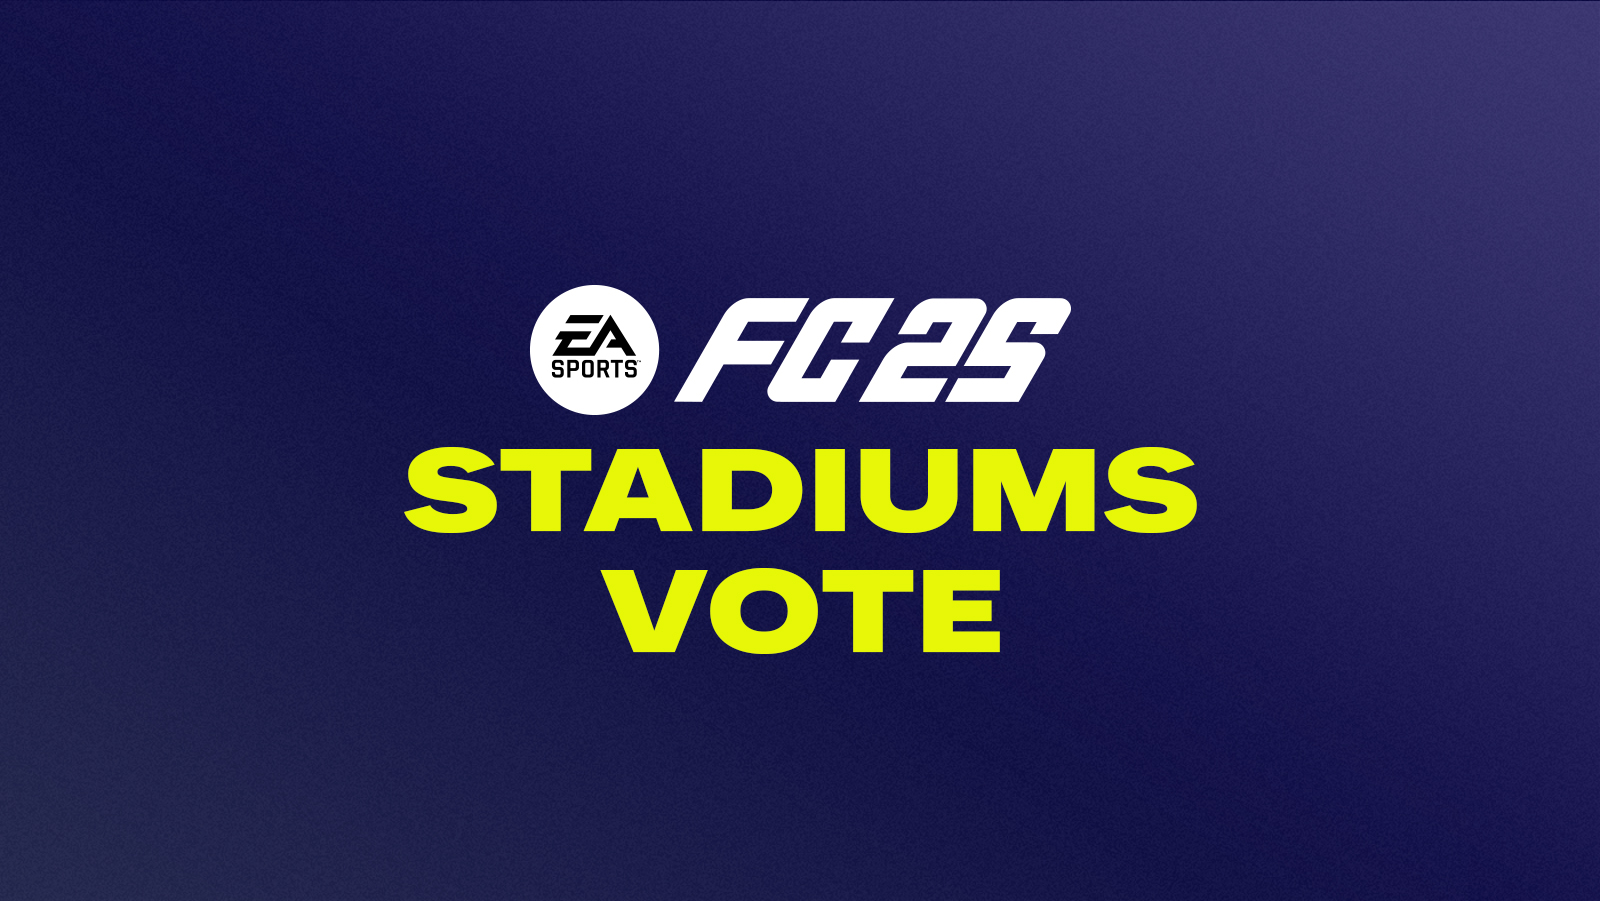 FC 25 Stadiums Vote